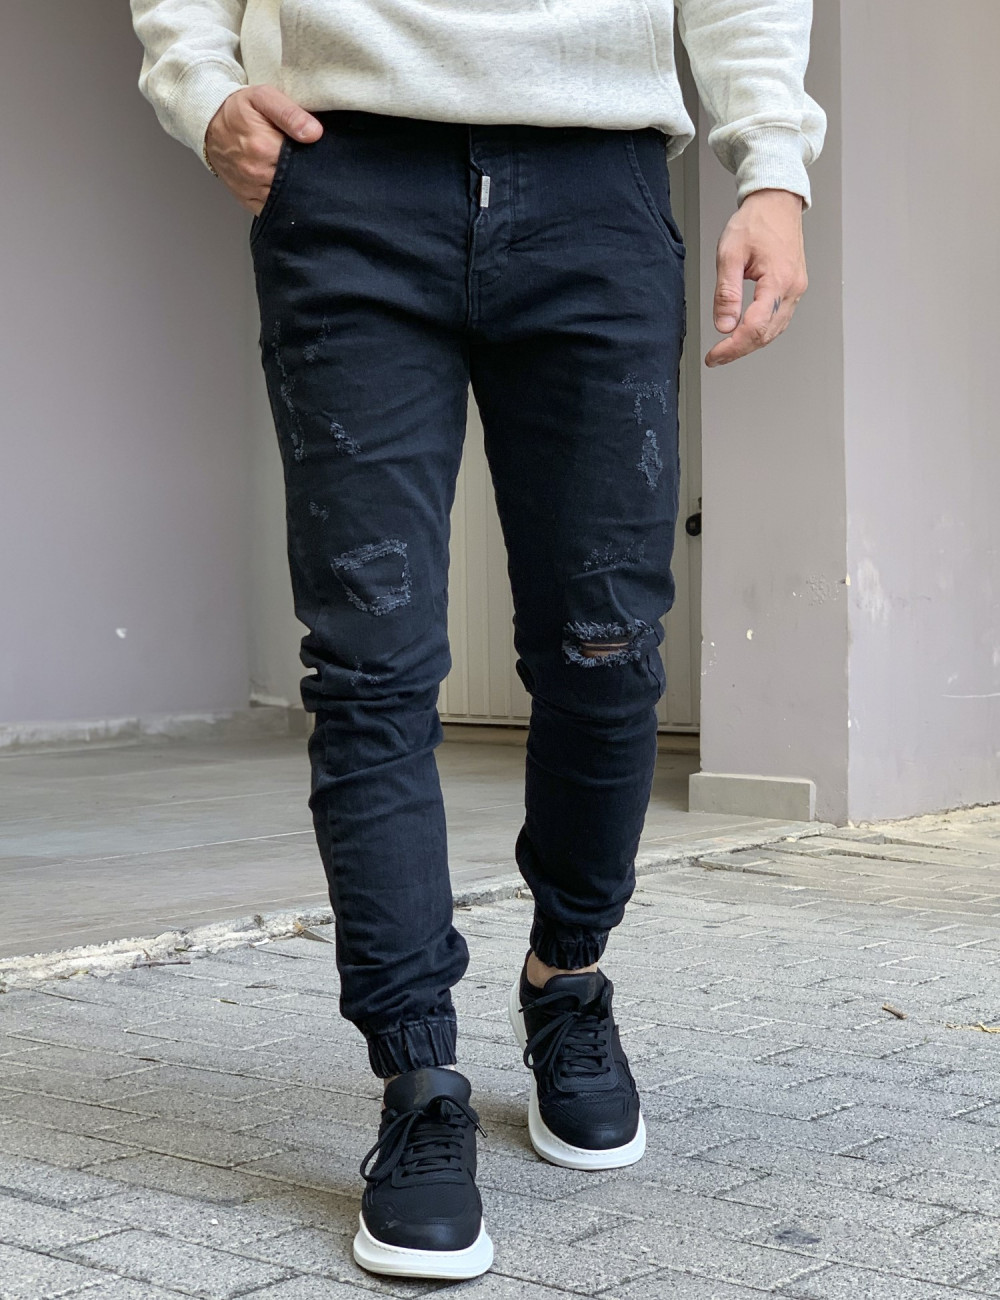 Ben Tailor Ανδρικό jean μαύρο παντελόνι με μπαλώματα και λάστιχο στα πόδια 0646